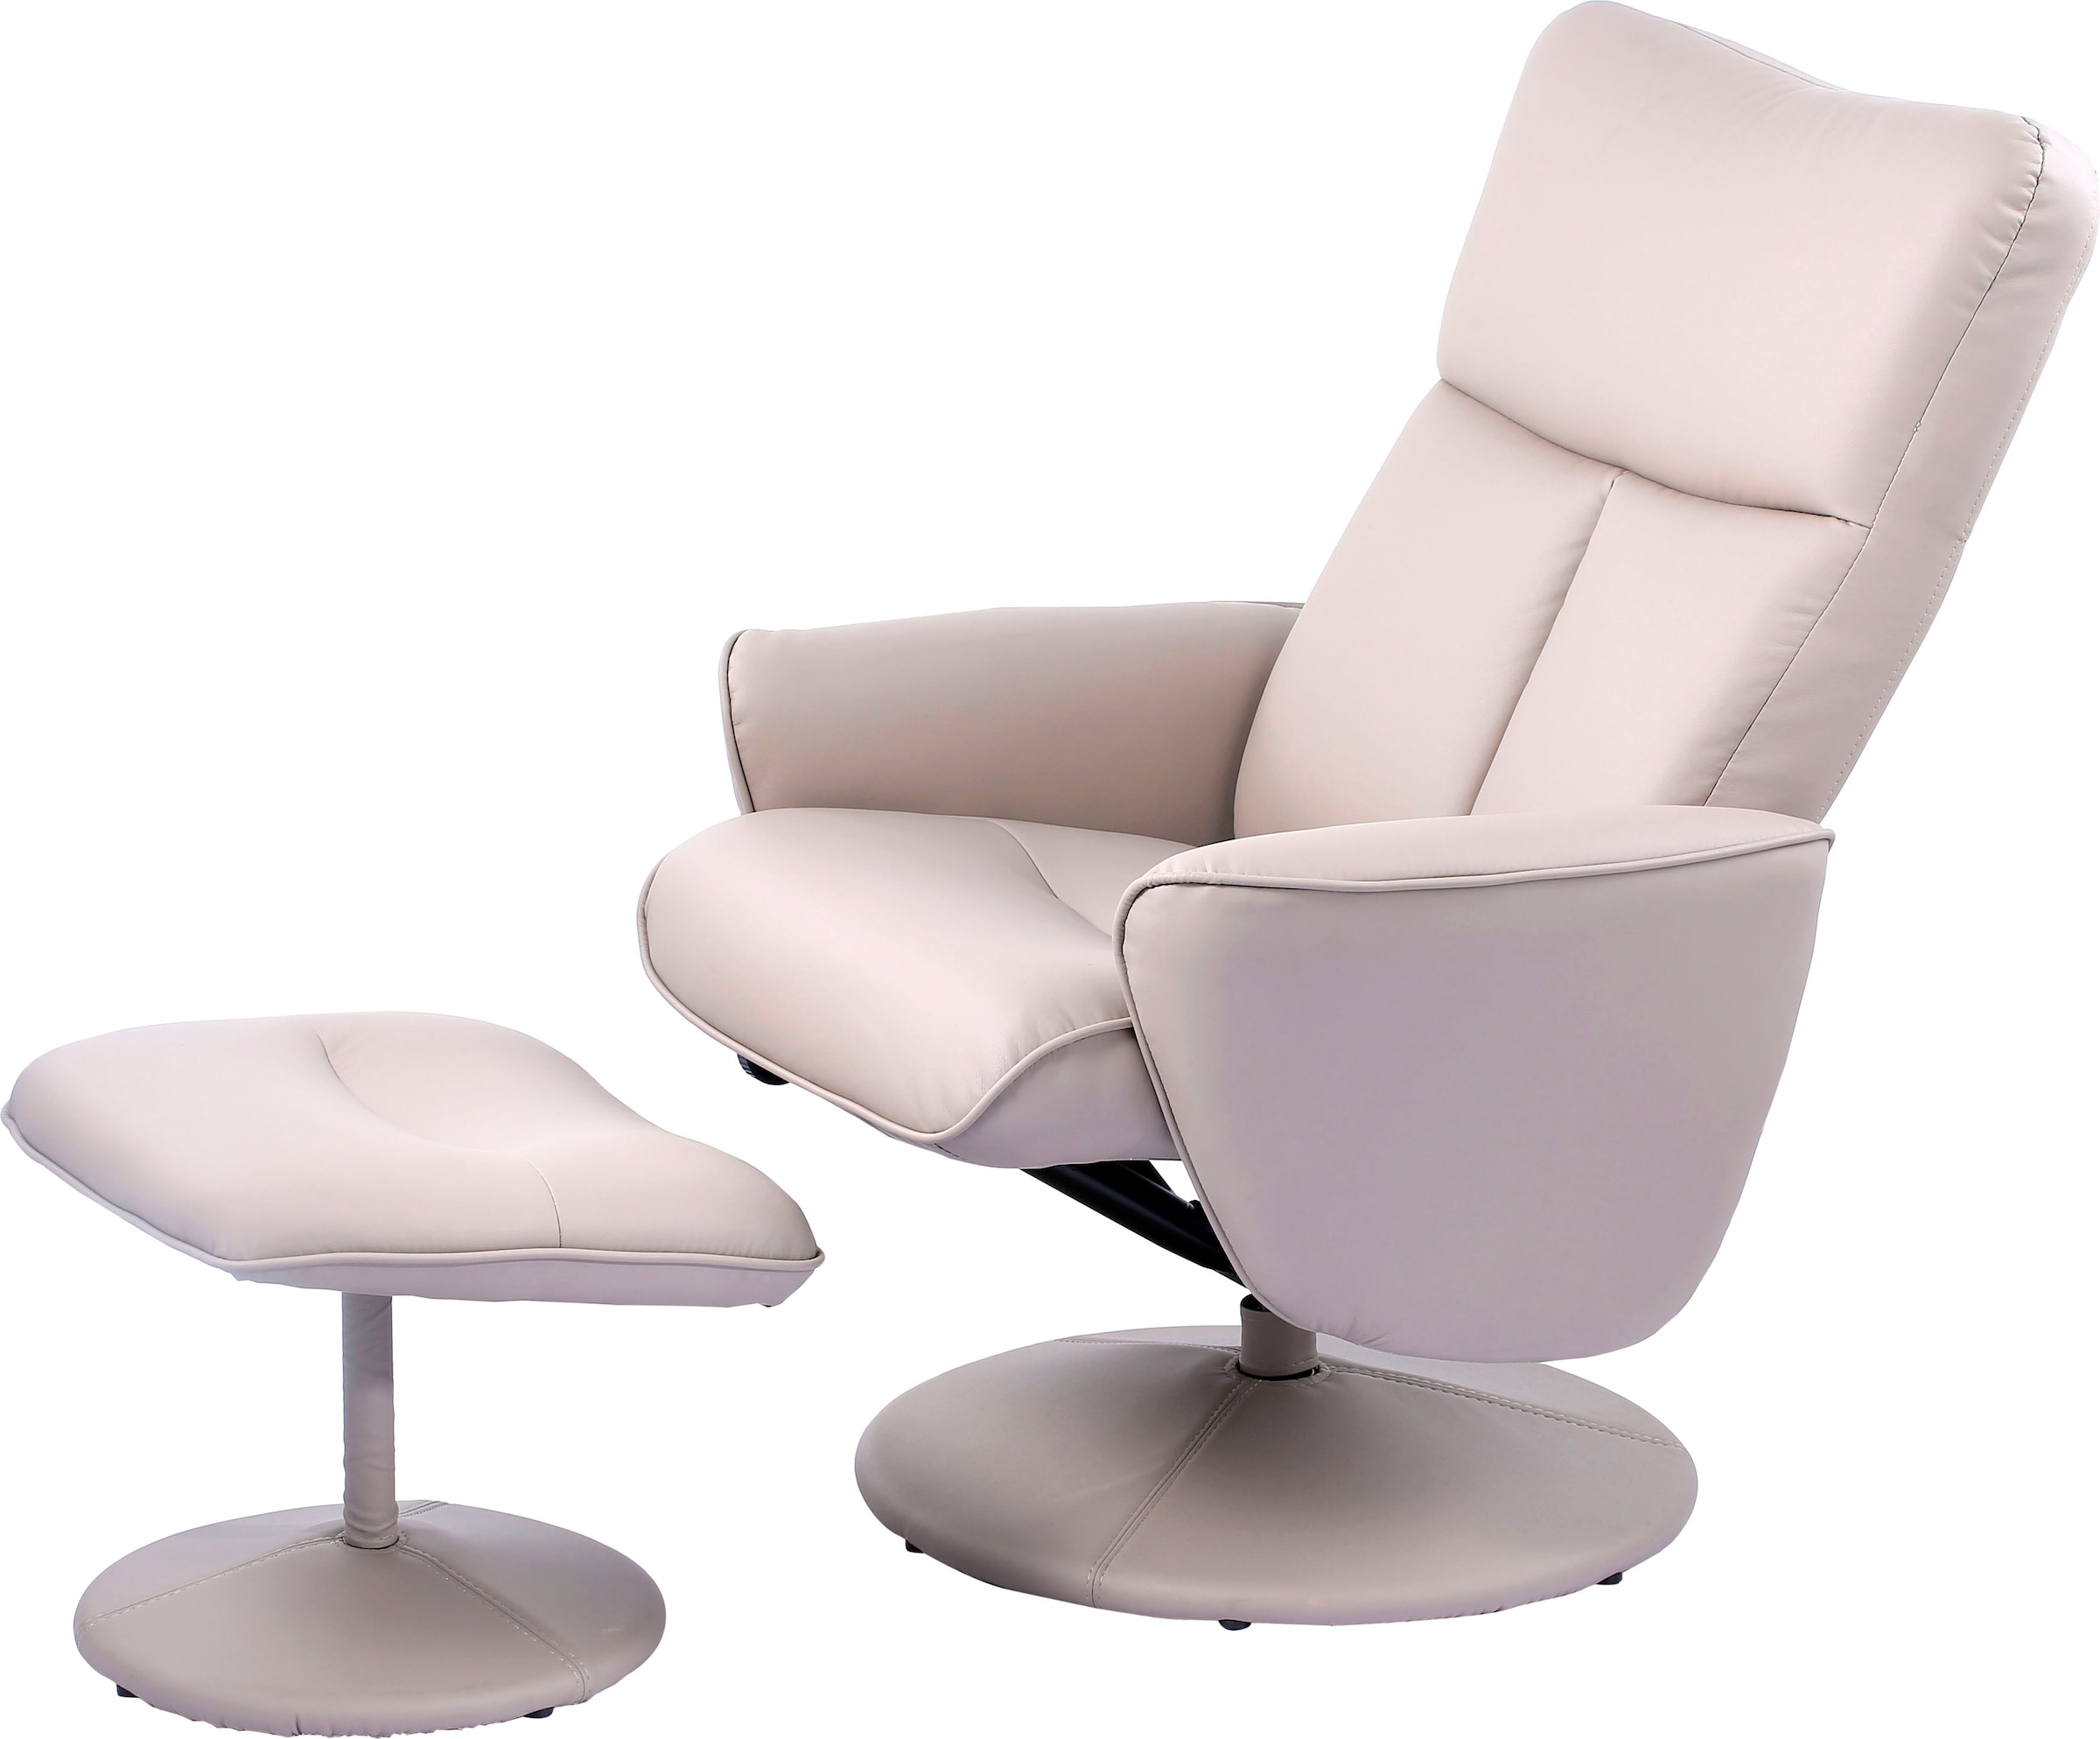 »Sessel Hocker) Relax-Stuhl Stuhl 160«, bequemer Kayoom Leandra jetzt kaufen (ohne